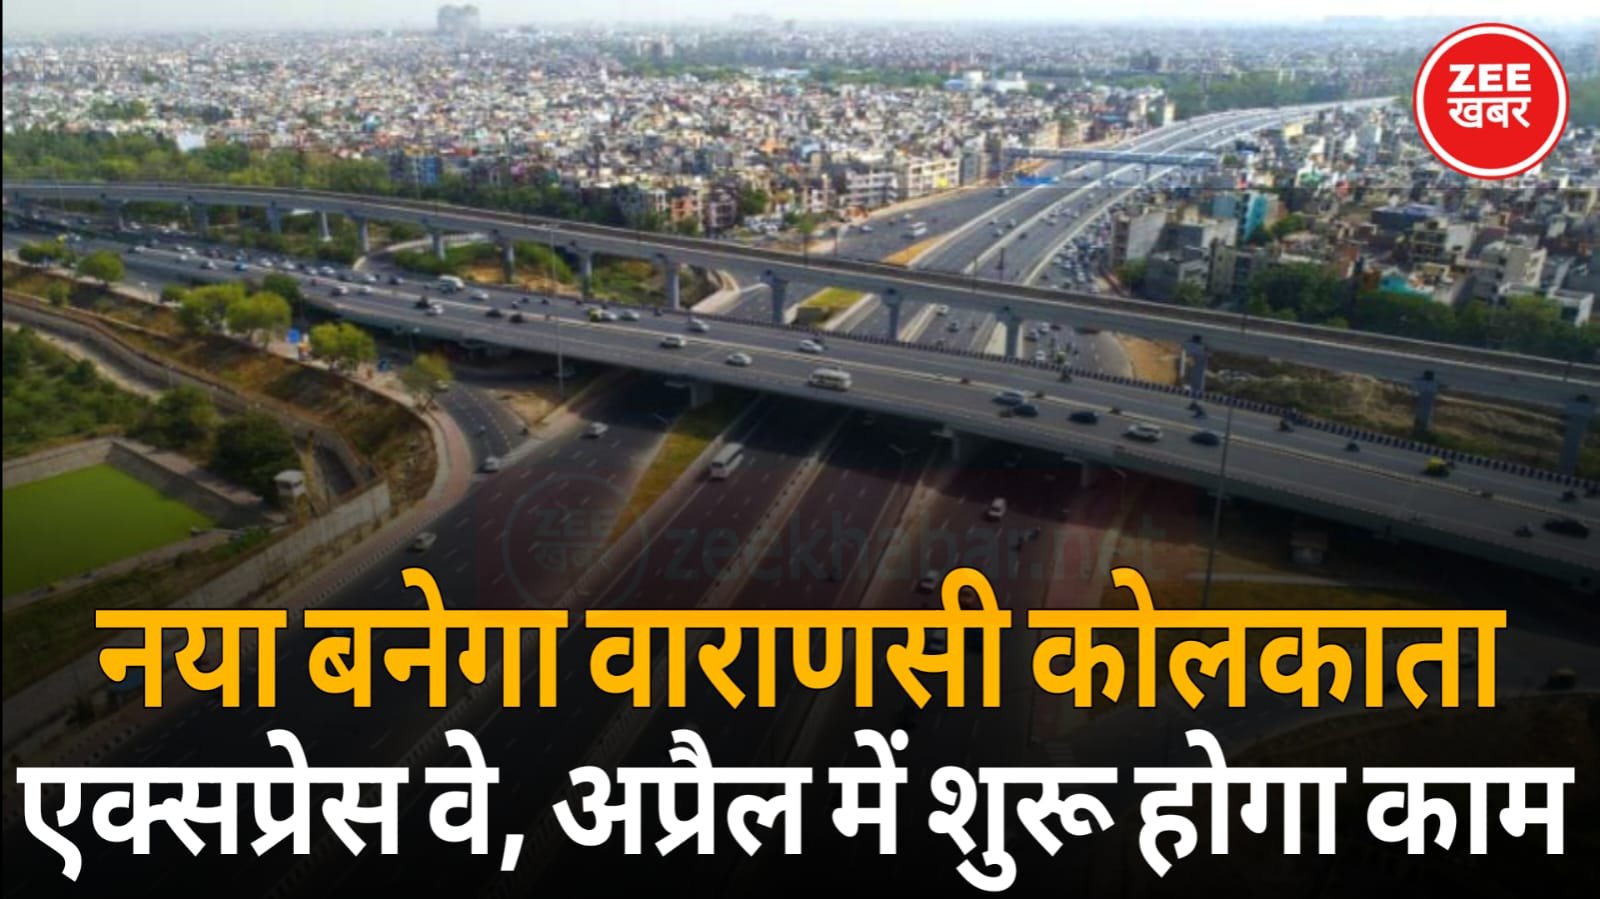 Varanasi Kolkata Expressway